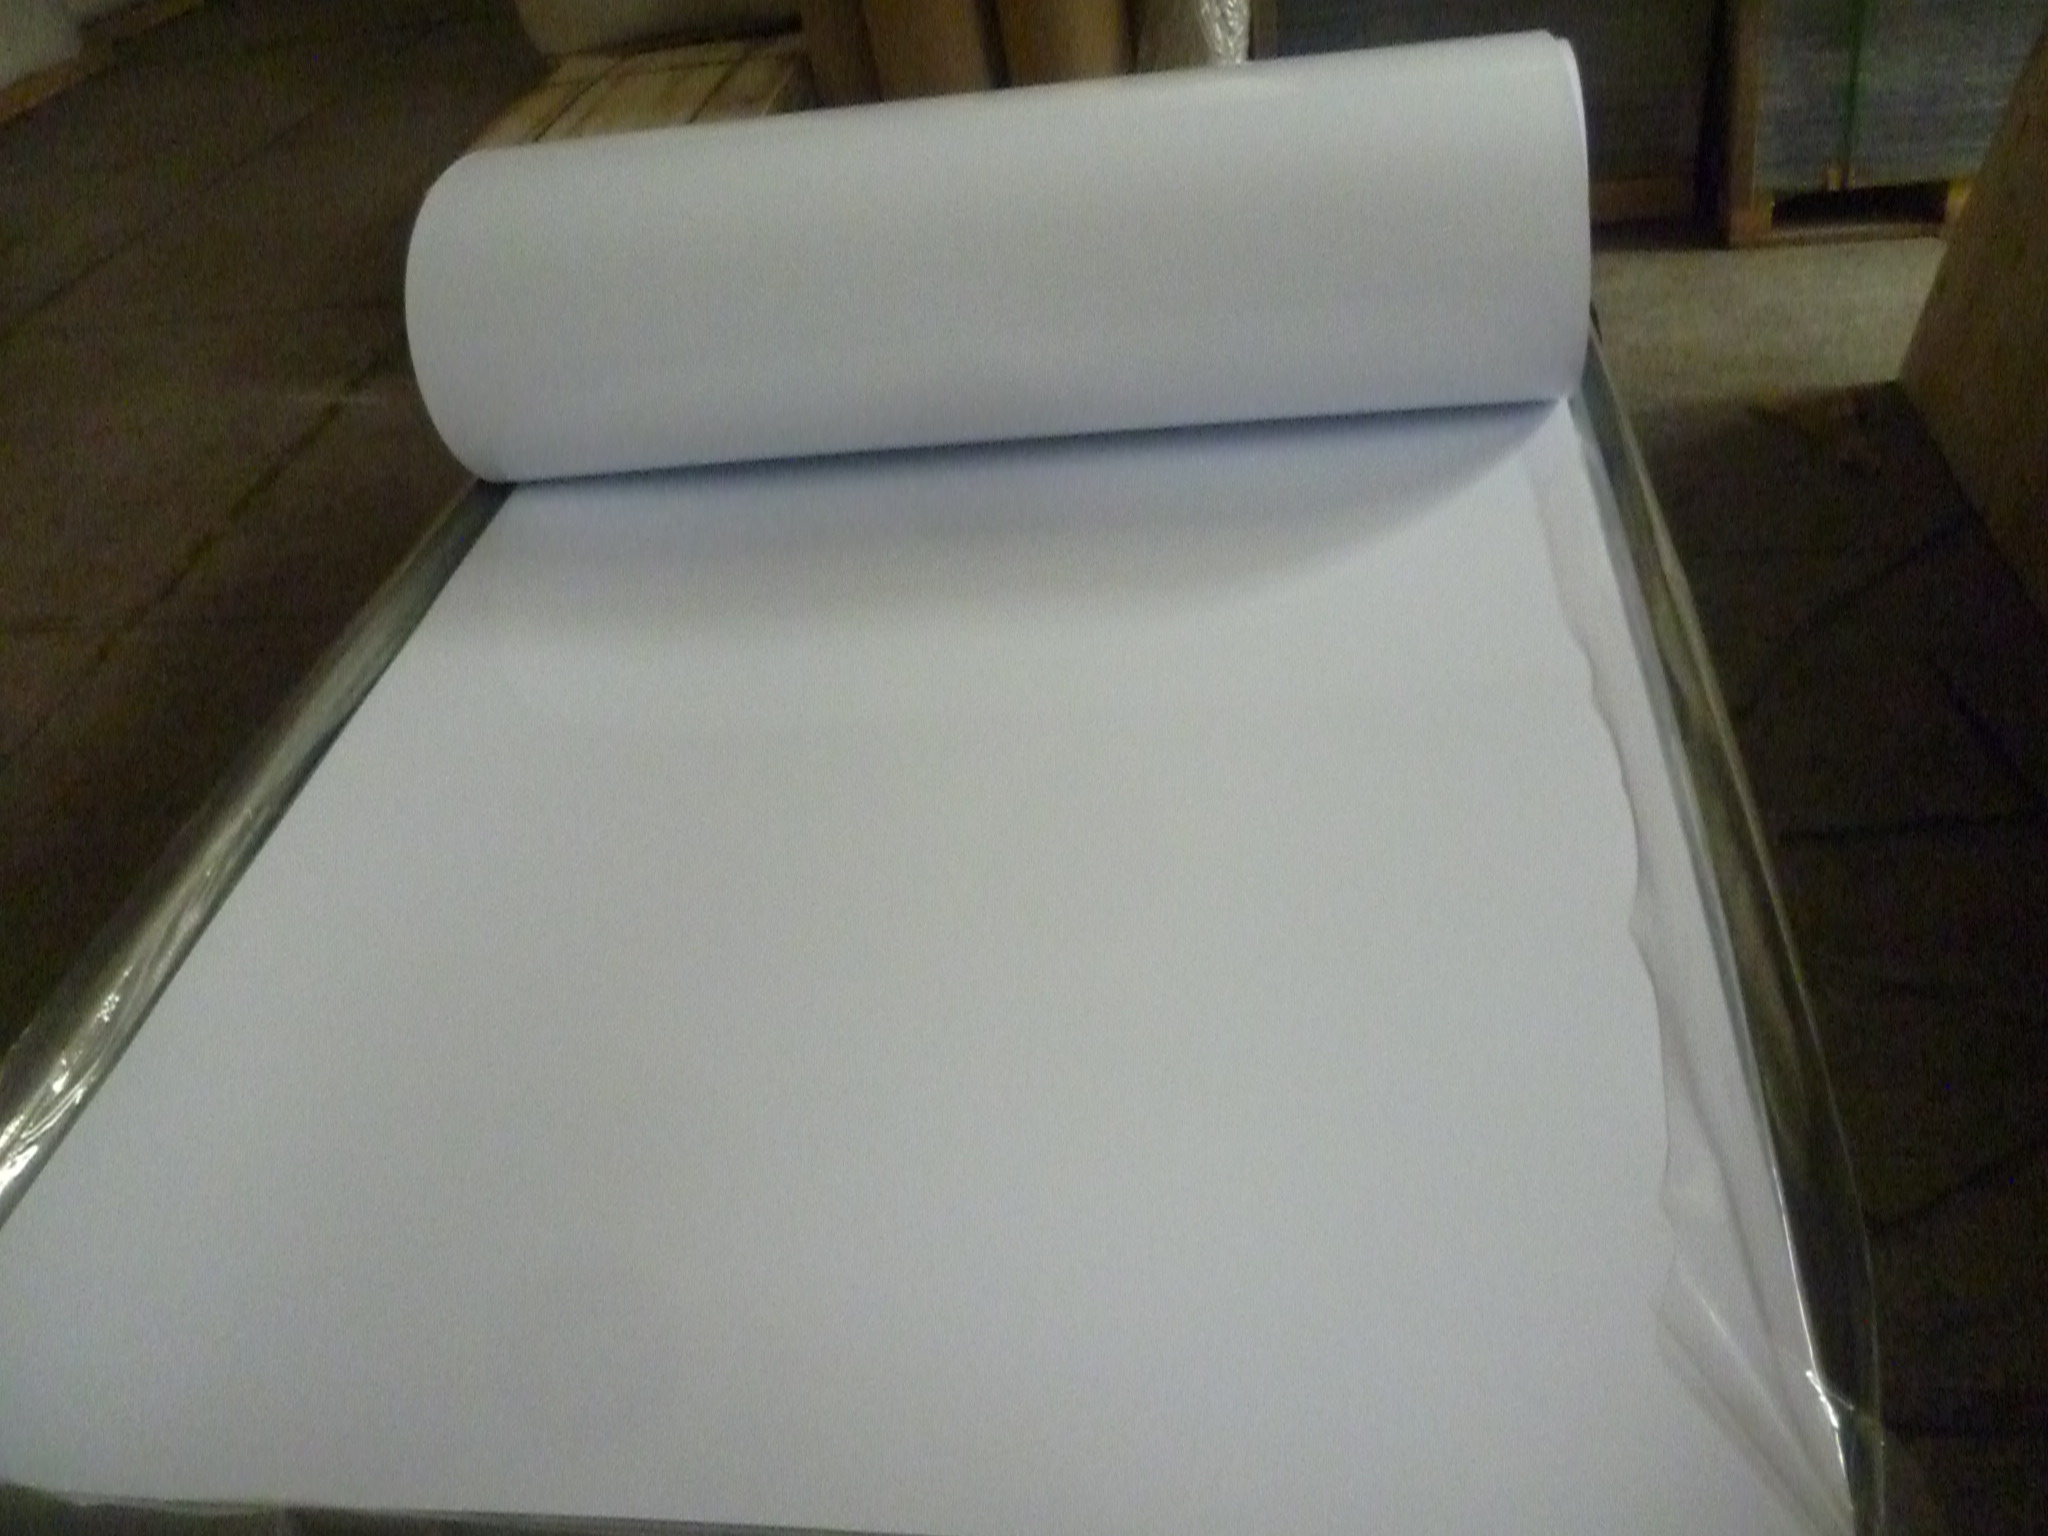 GS High Density Rigid White 4*8 Feet 1-40 Mm PVC Plastic Foam Sheet Advertising Field Outdoors Indoors